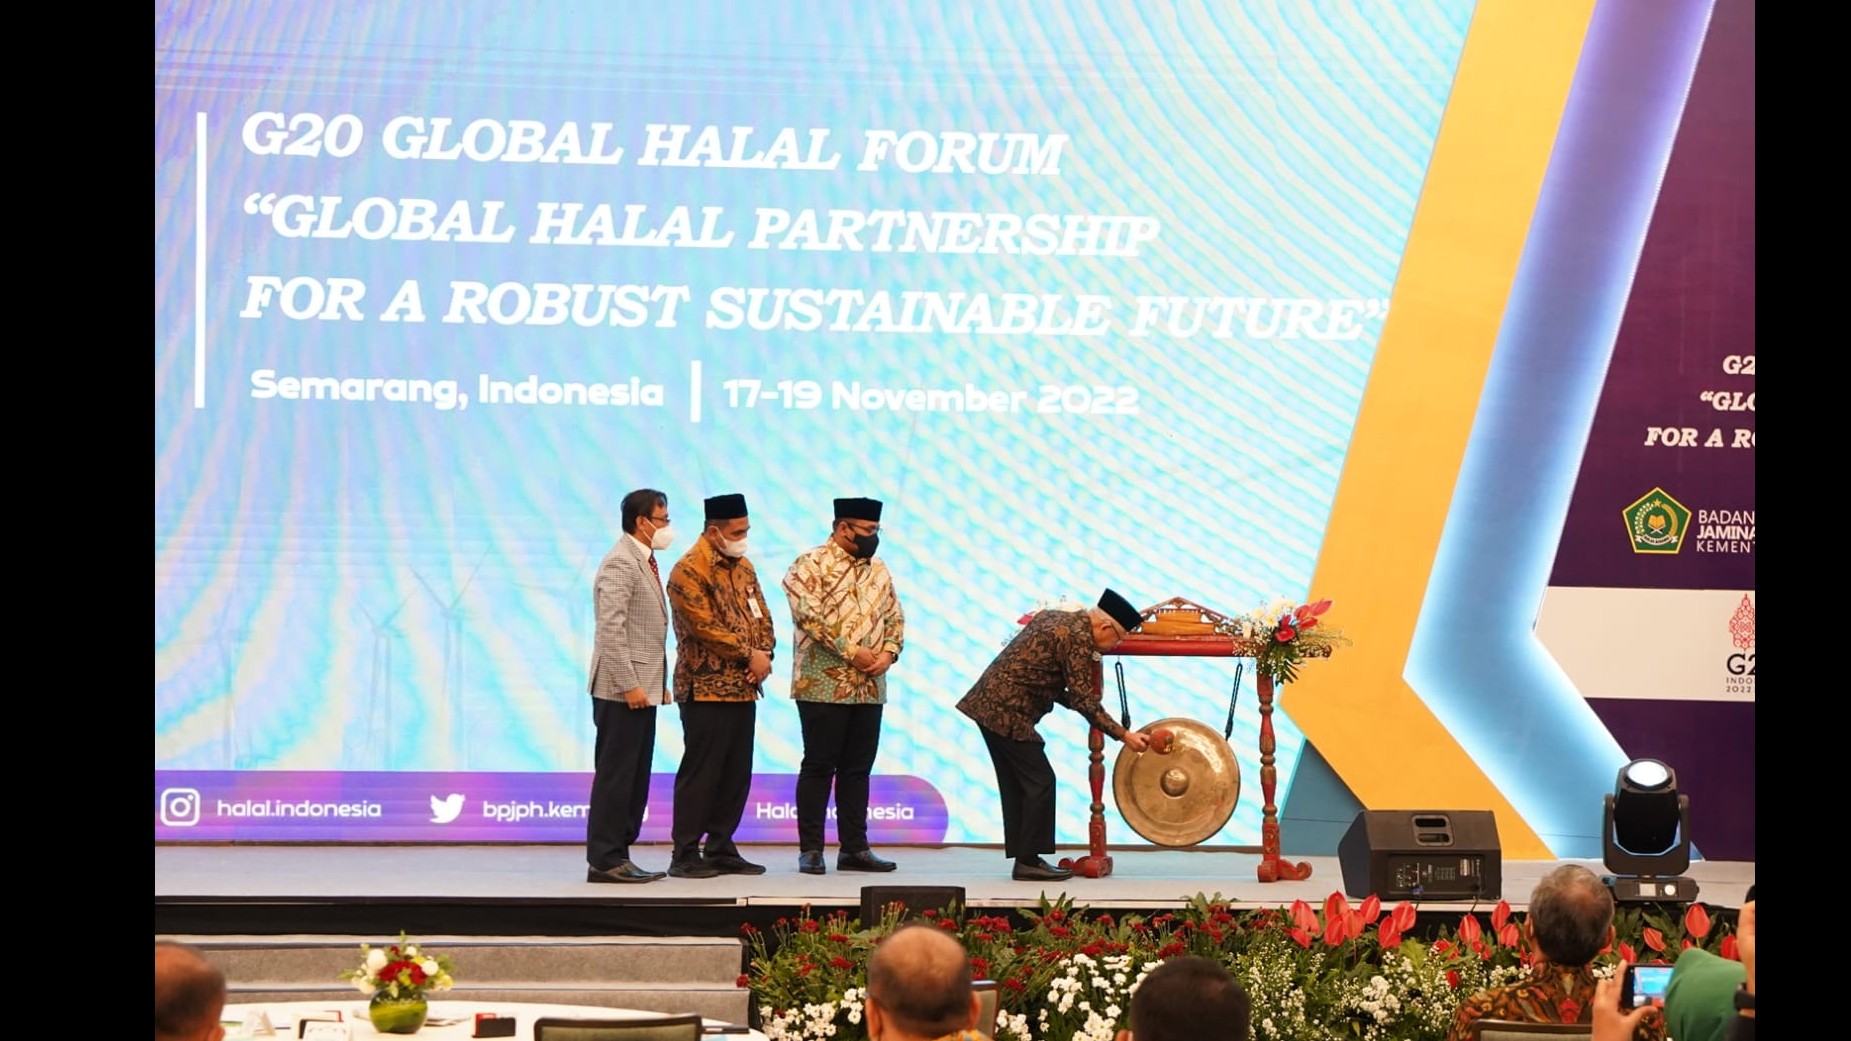 Wakil Presiden Ma'ruf Amin memukul gong sebagai tanda dibukanya Forum Halal 20, di Semarang, Kamis (17/11/2022)